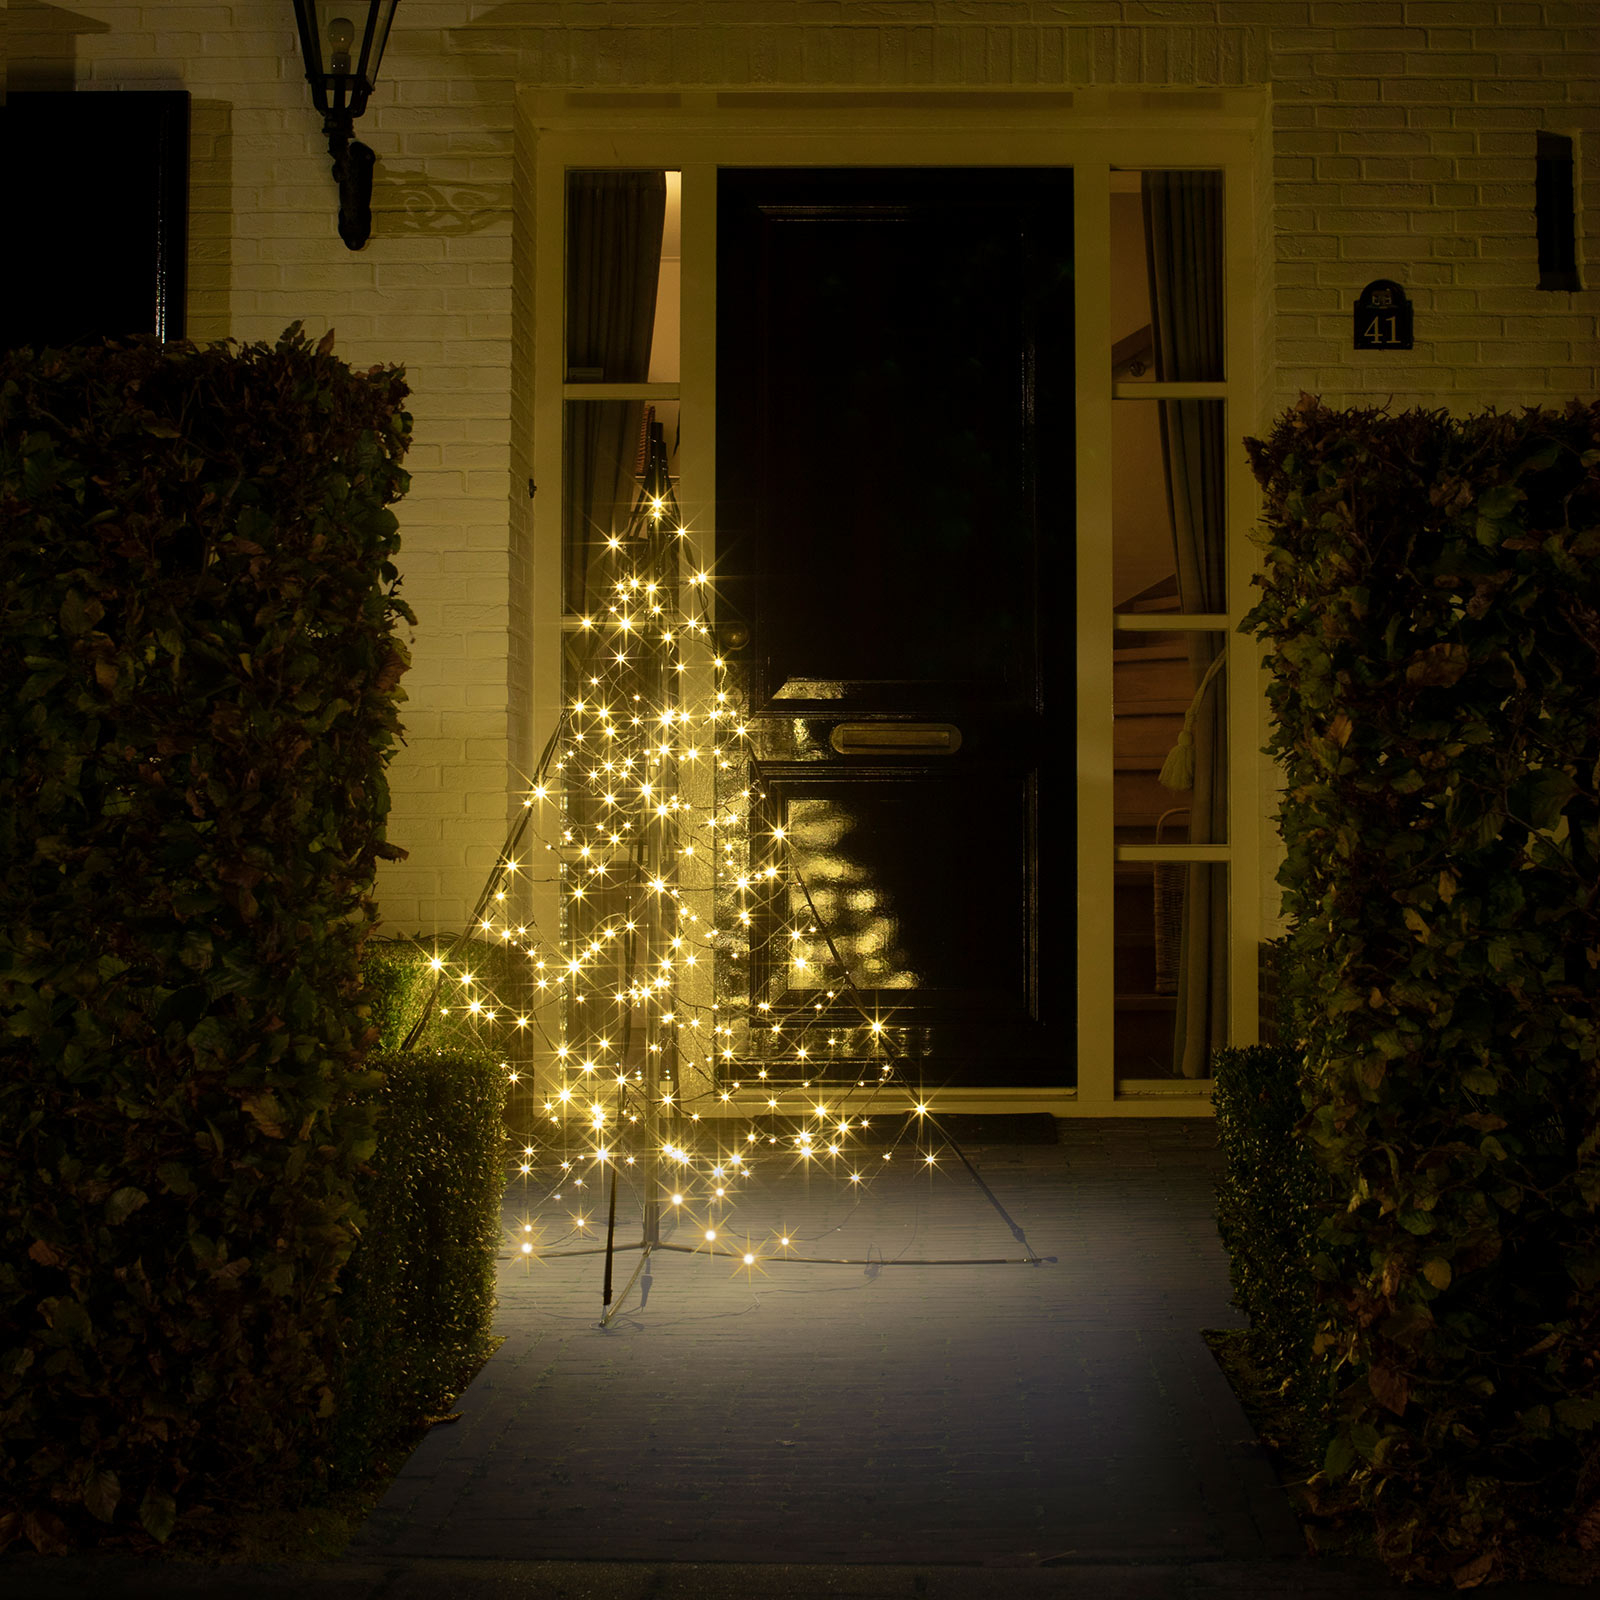 Árbol de Navidad Fairybell con mástil, 240 LED 150cm